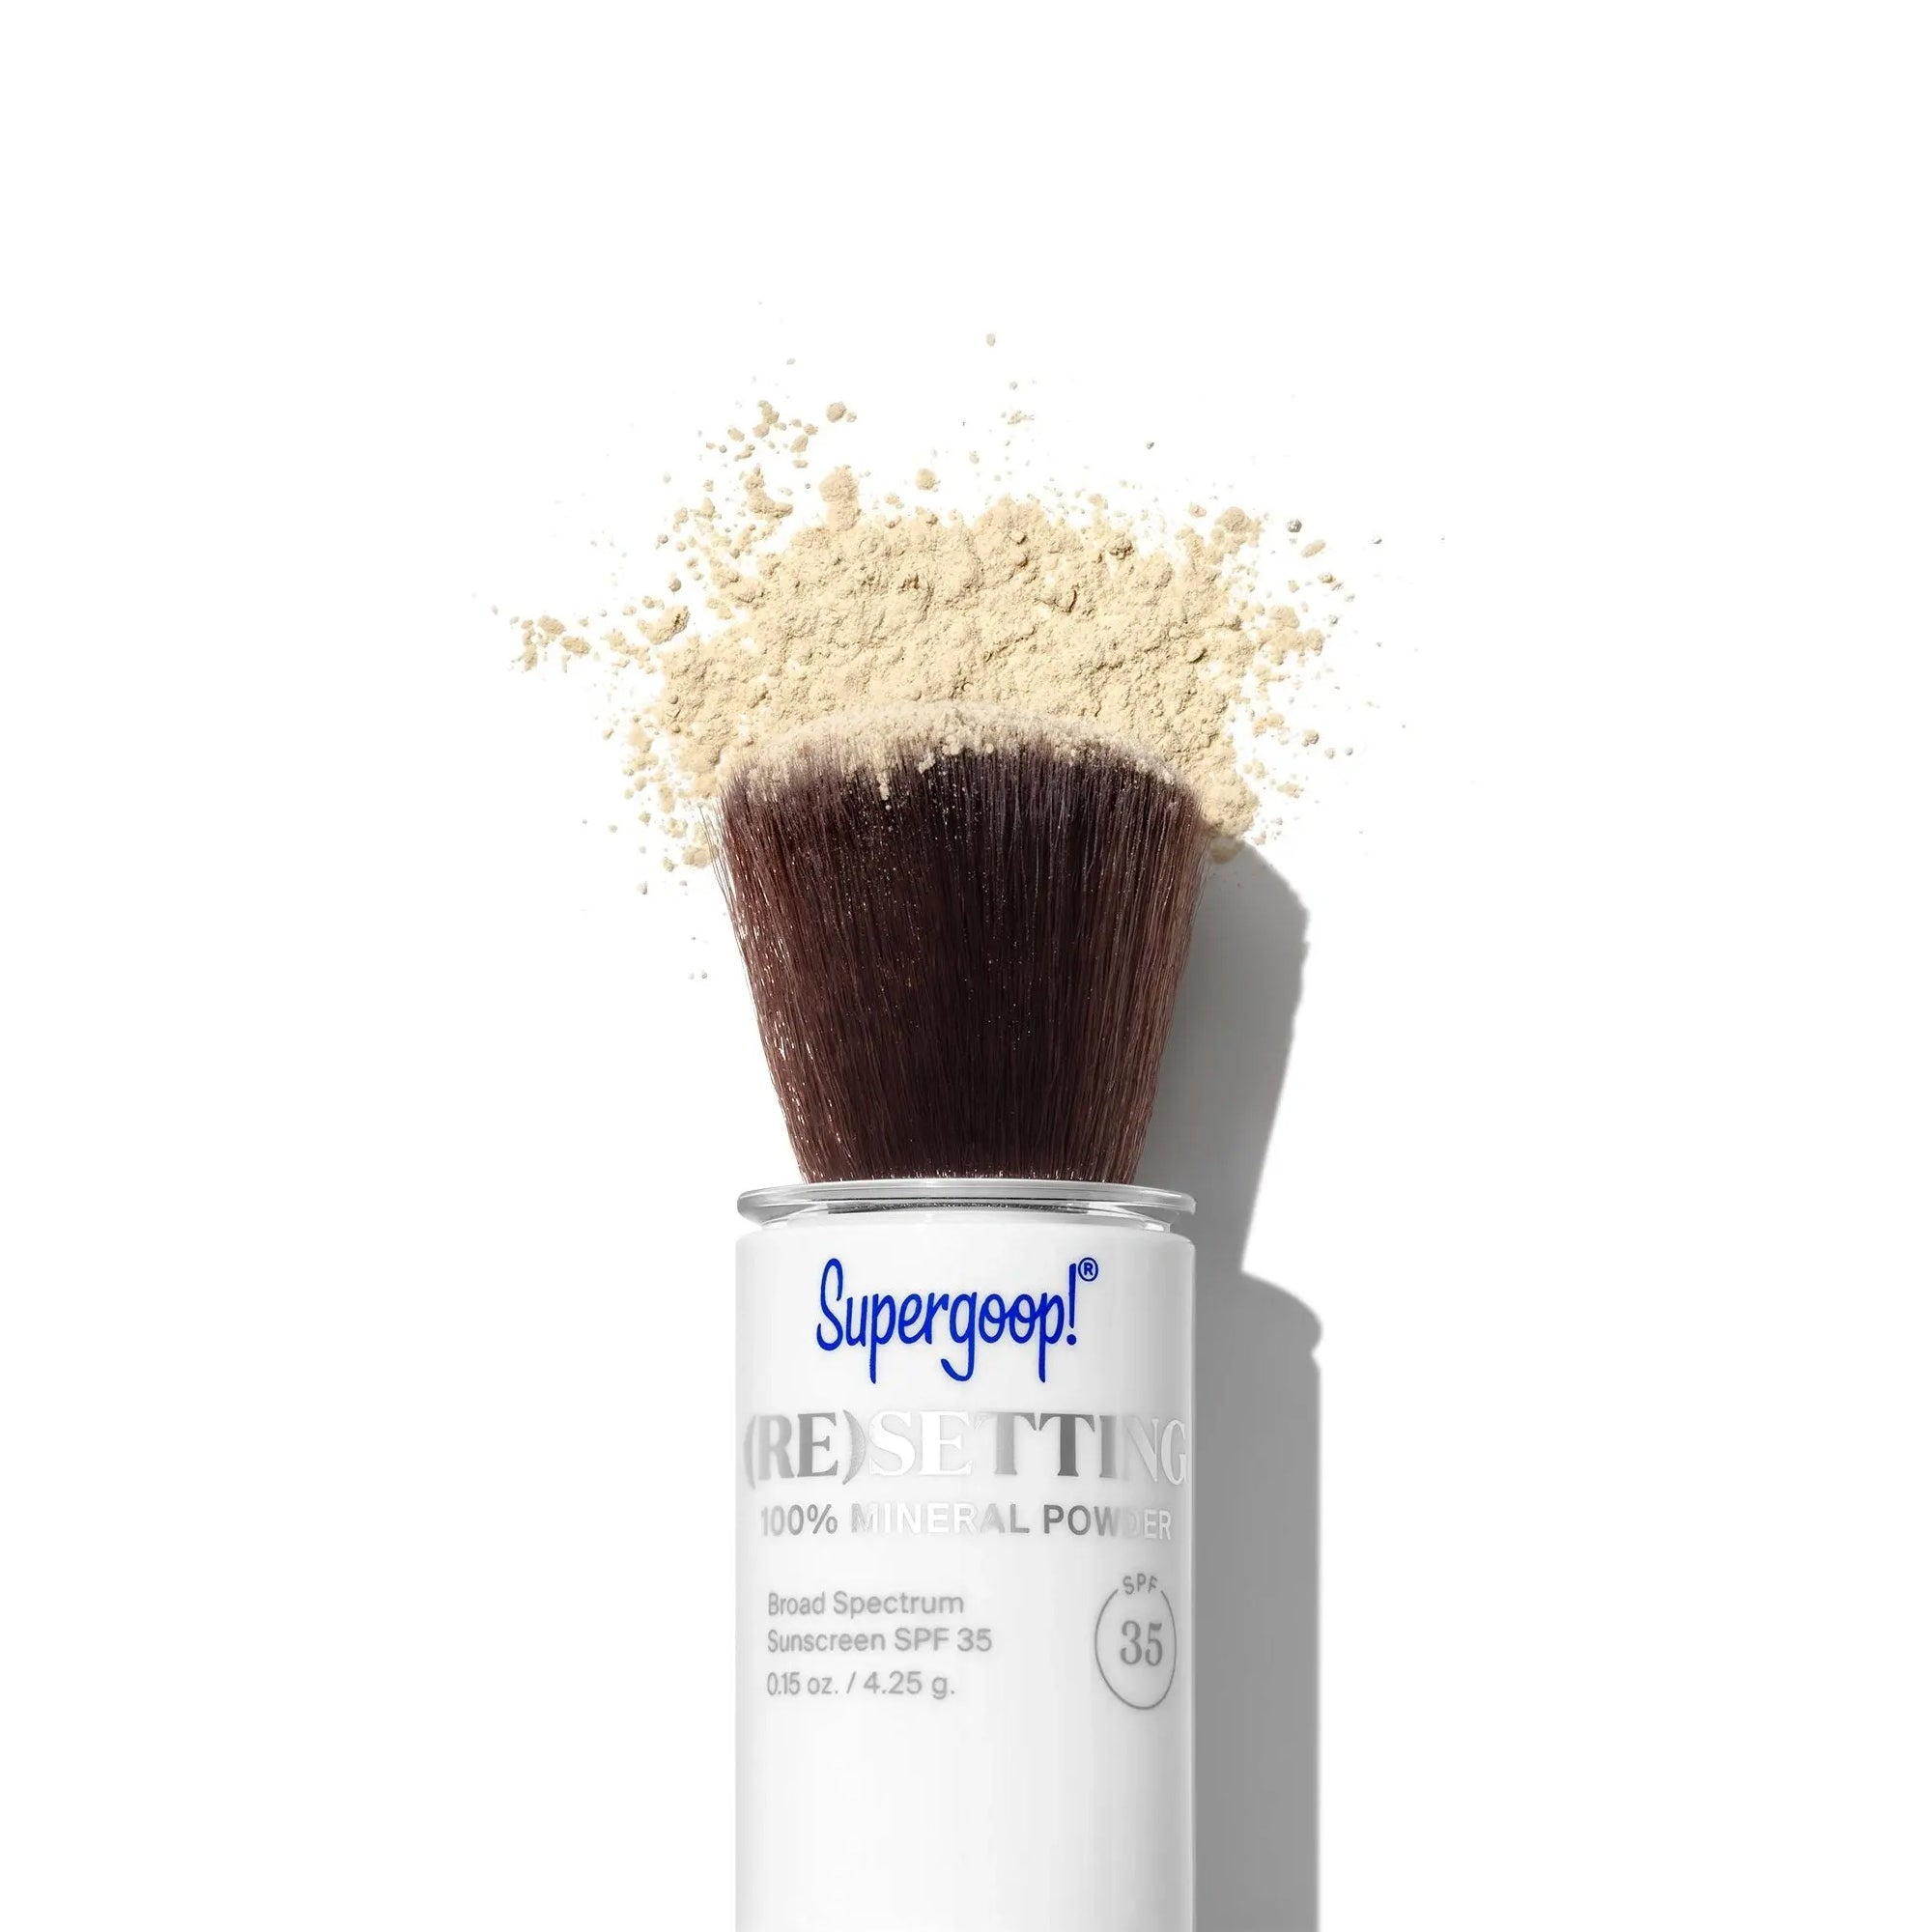 (Re)setting 100% Mineral Powder SPF 35, Translucent